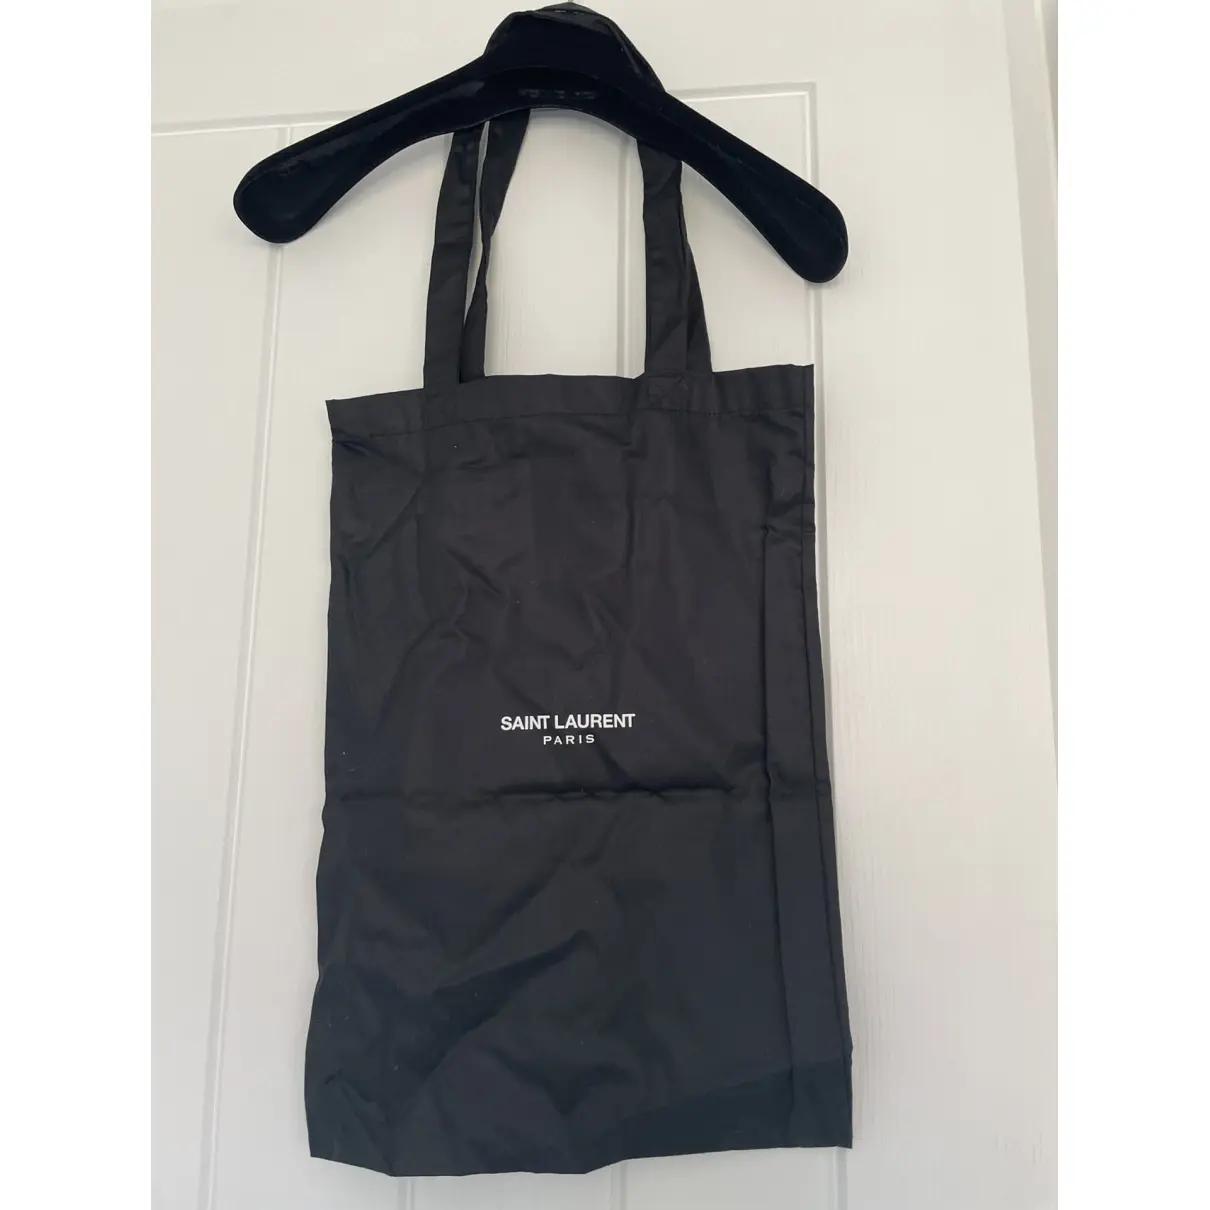 Buy Saint Laurent Cloth handbag online